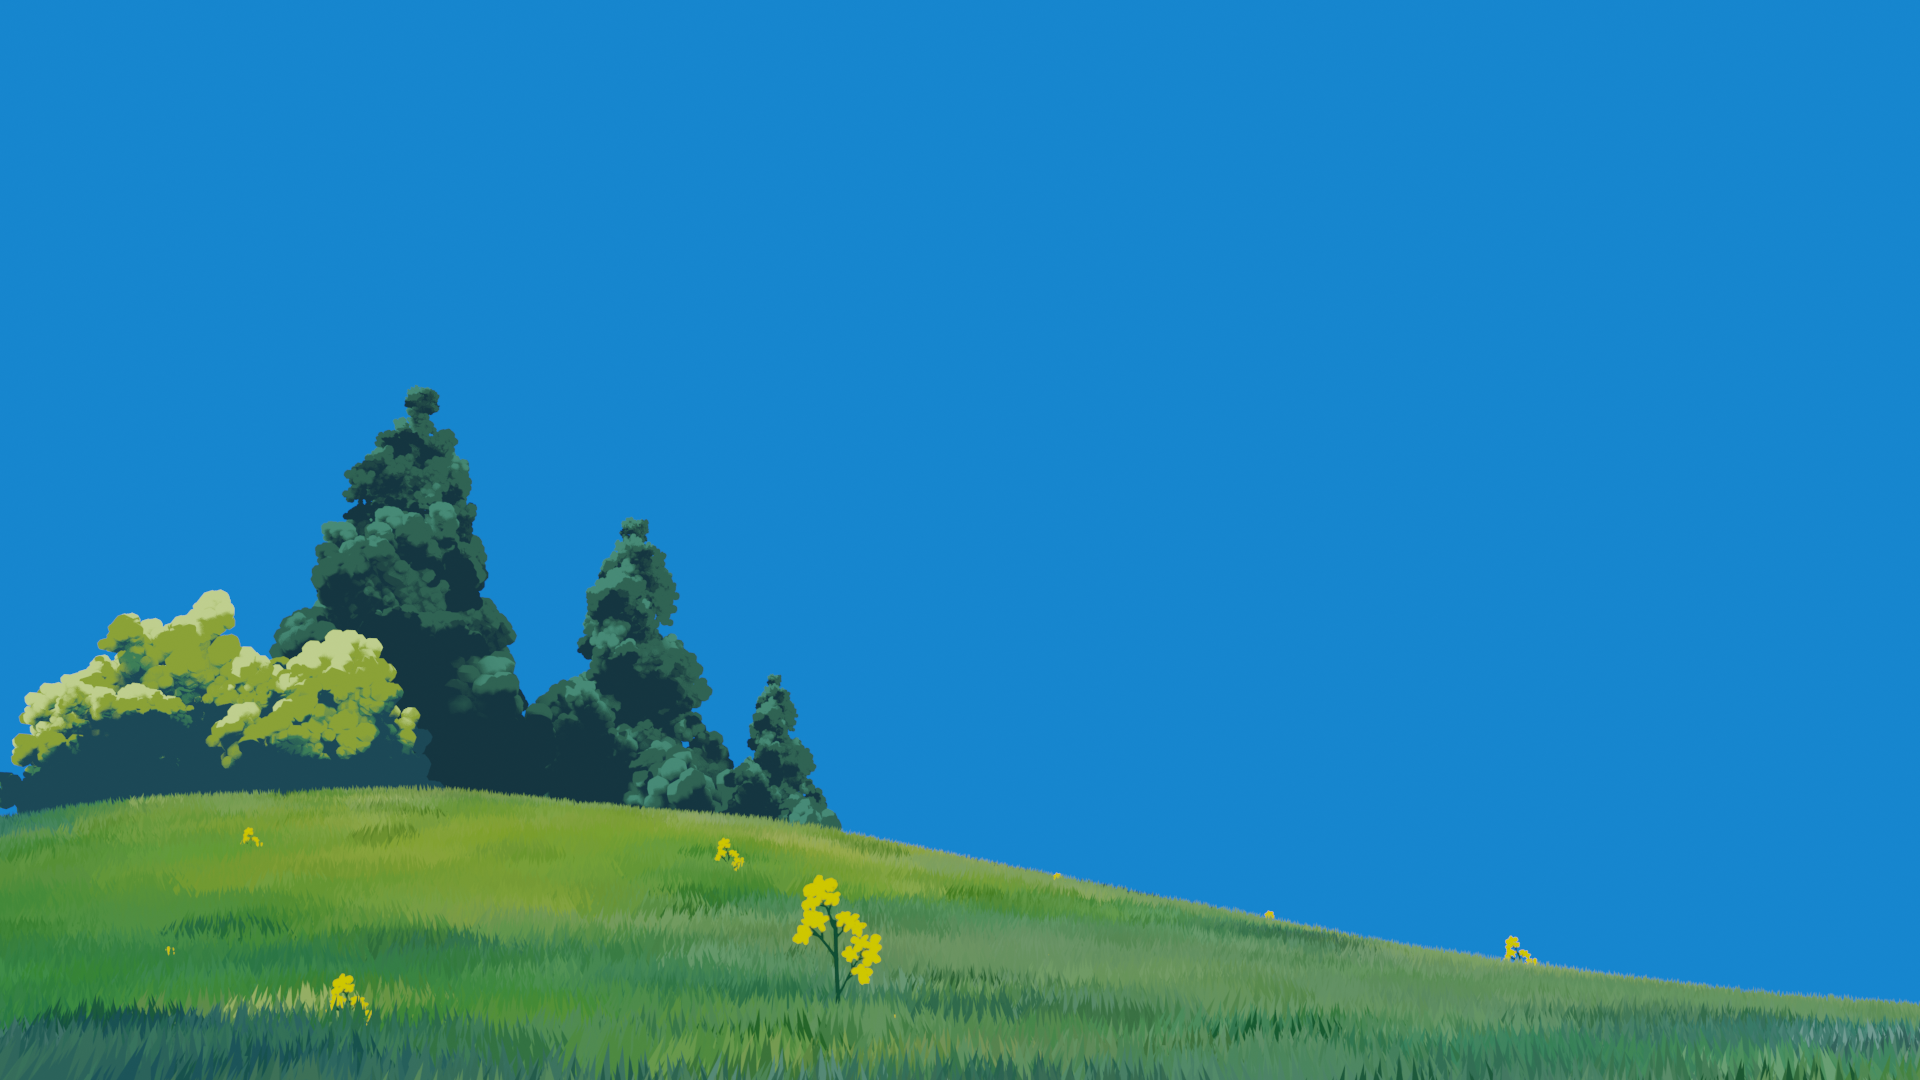 Studio Ghibli Blender Vector Landscape Wallpaper:1920x1080